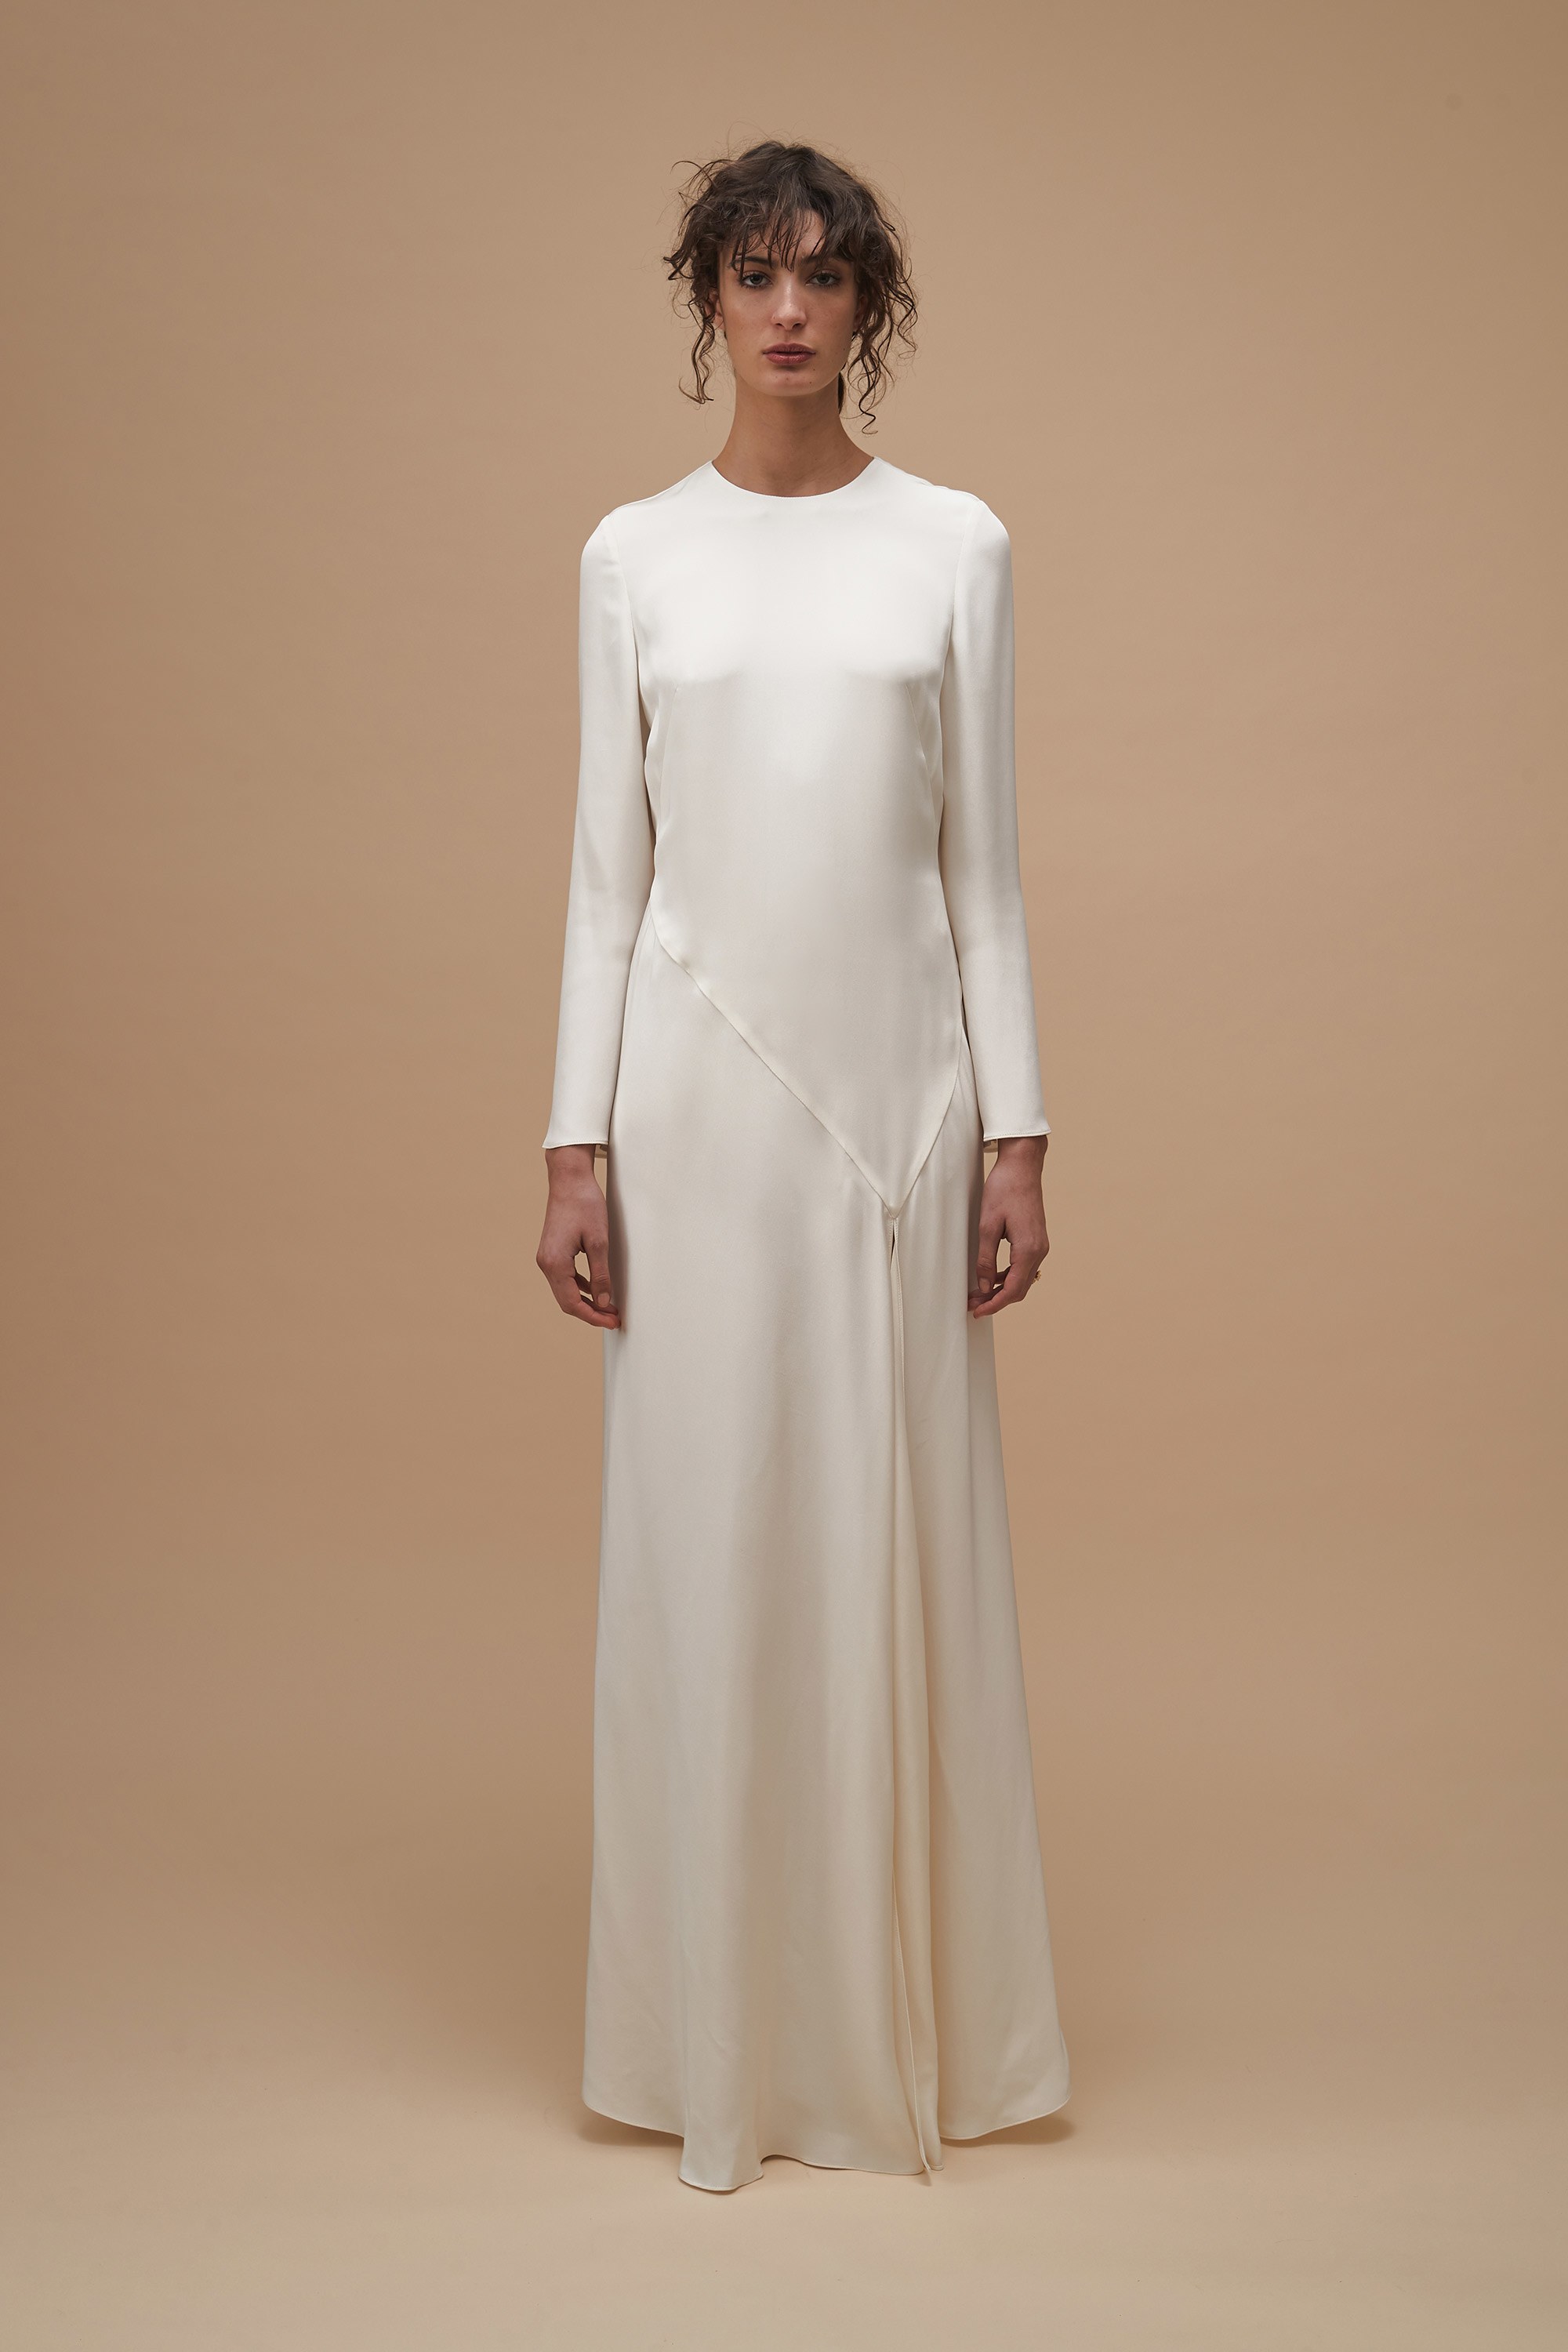 Karen Walker Unveils Bespoke Modern Bridal Collection | Fashion News ...